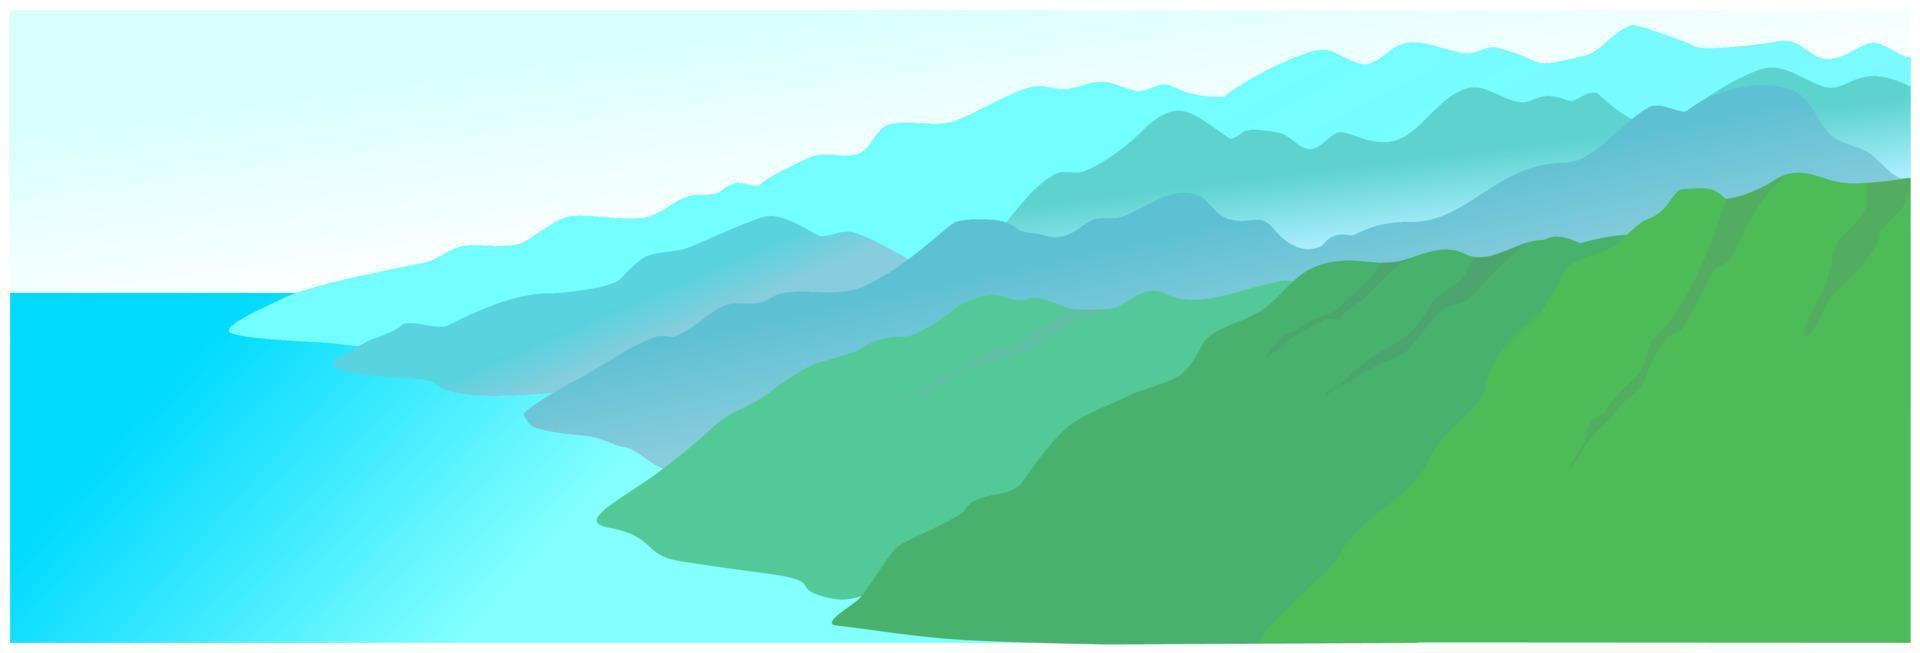 vector mountain ridges, sky and ocean